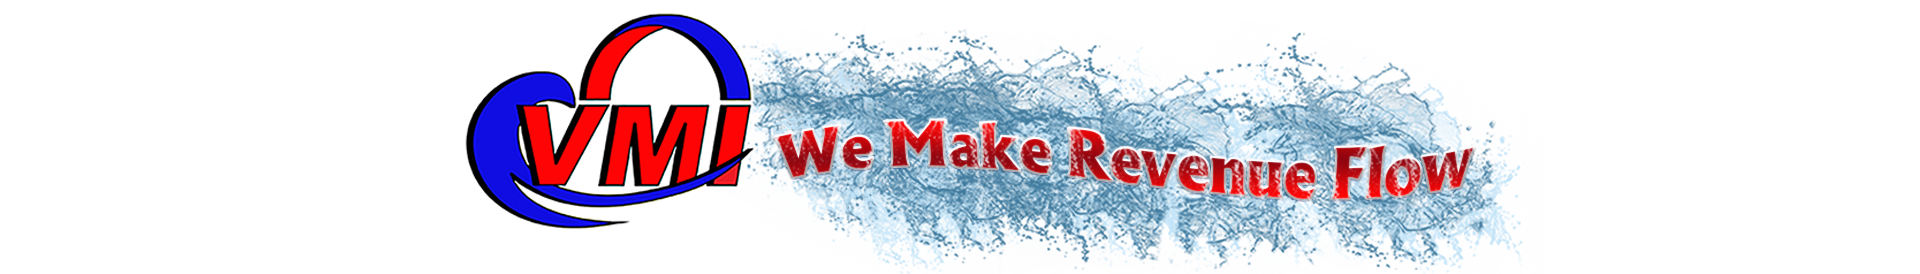 VMI We Make Revenue Flow Logo